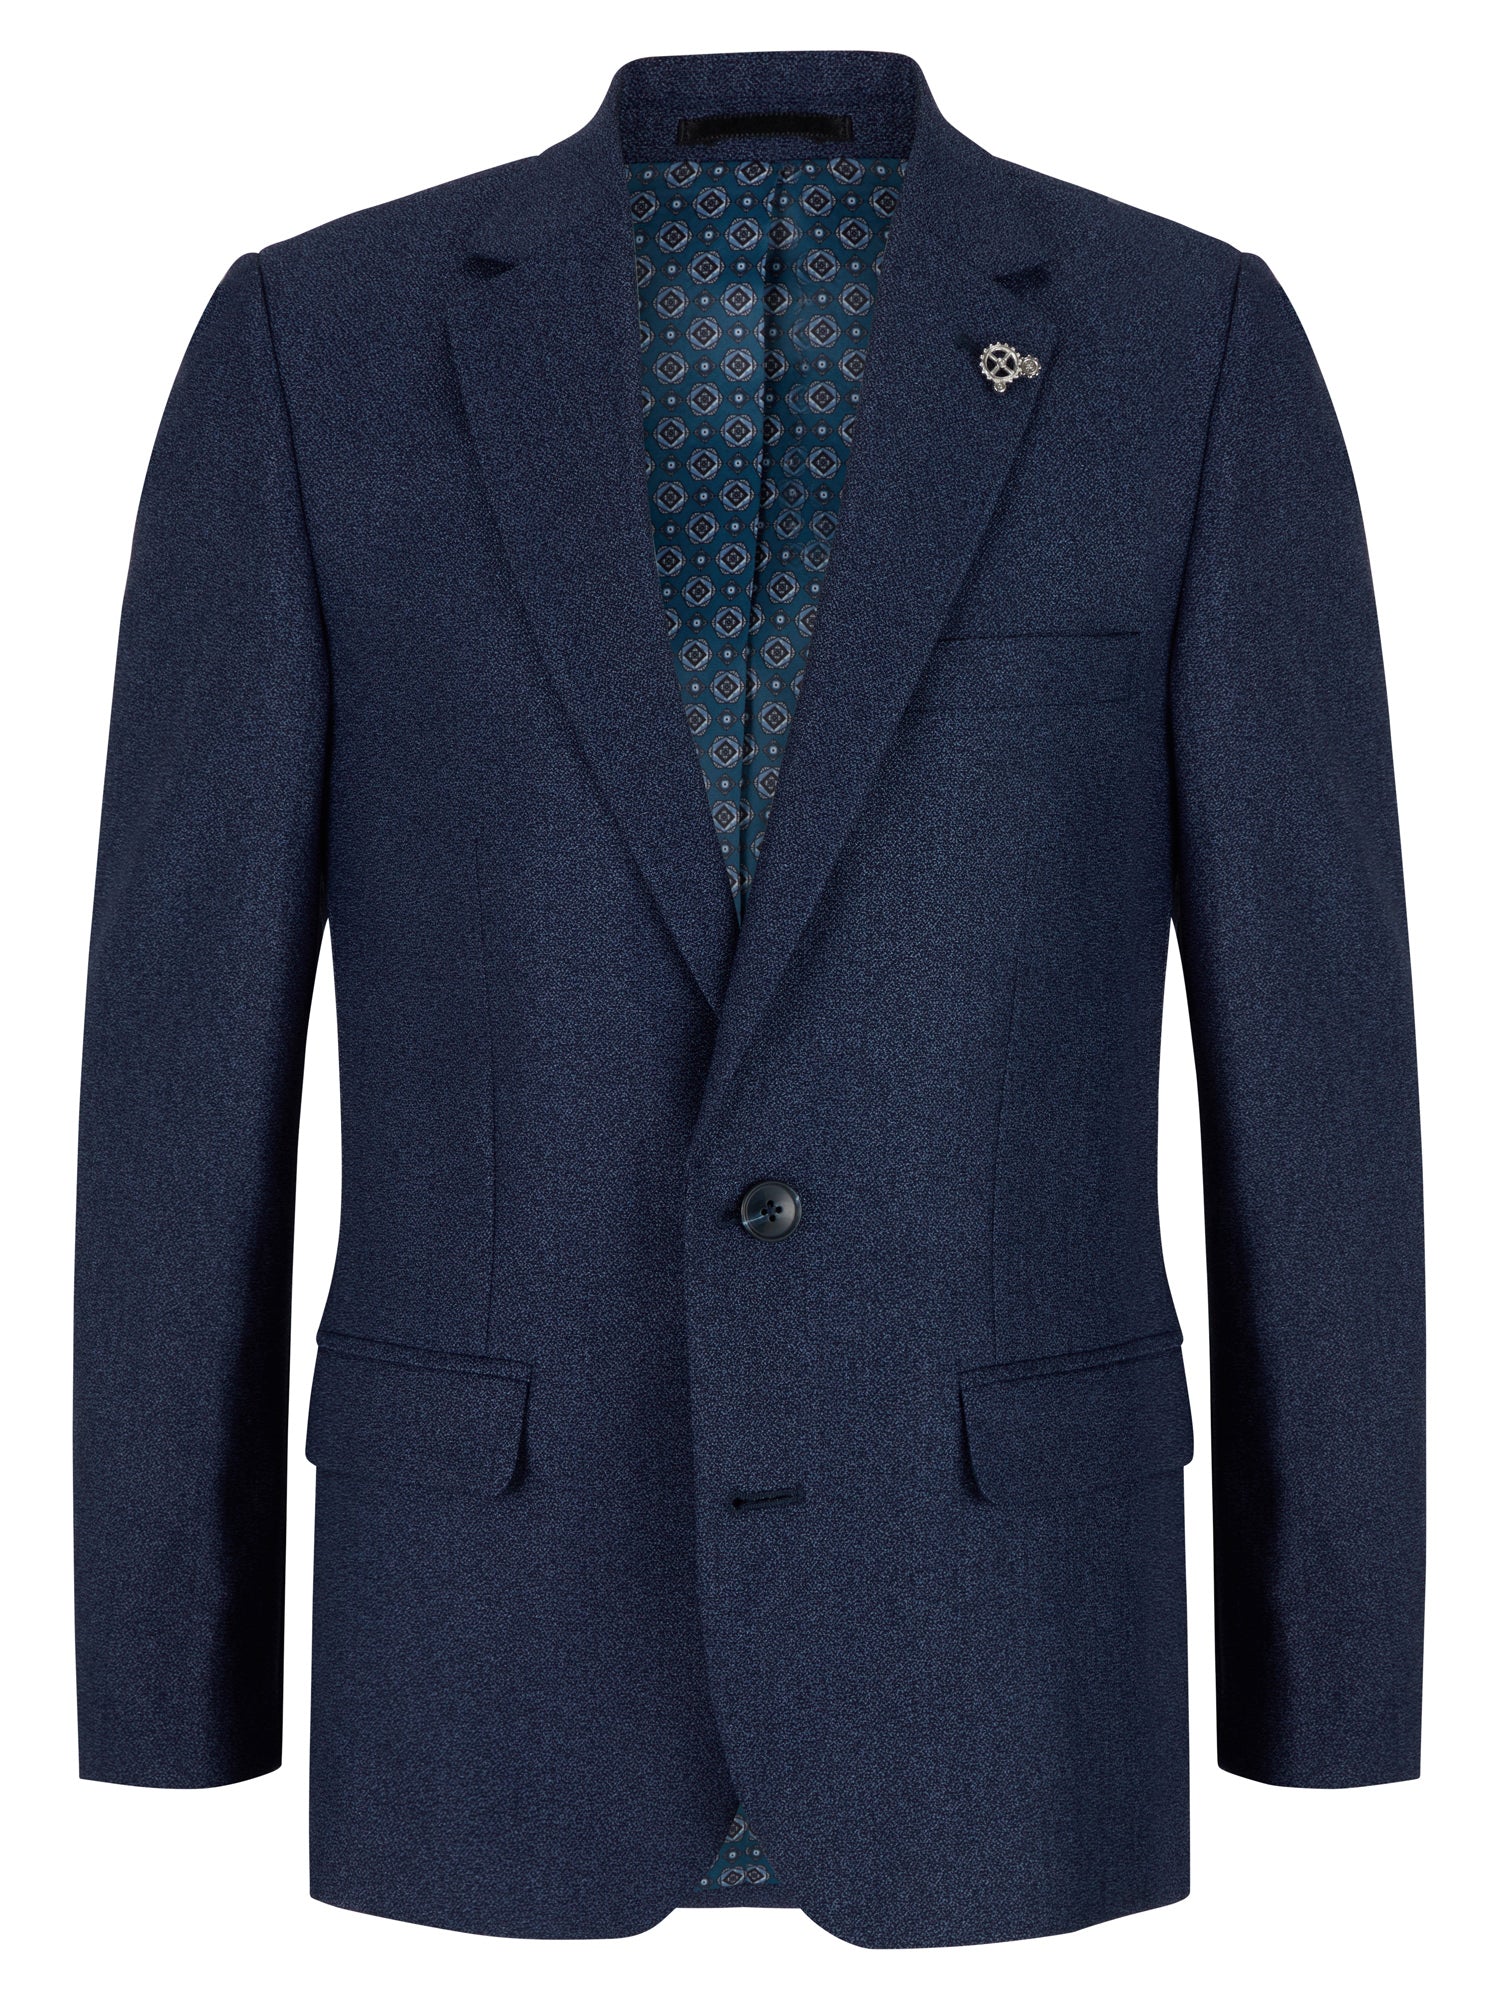 1880 Club Boys Junior Suit Jacket - Tivoli 15120 - Matt O'Brien Fashions